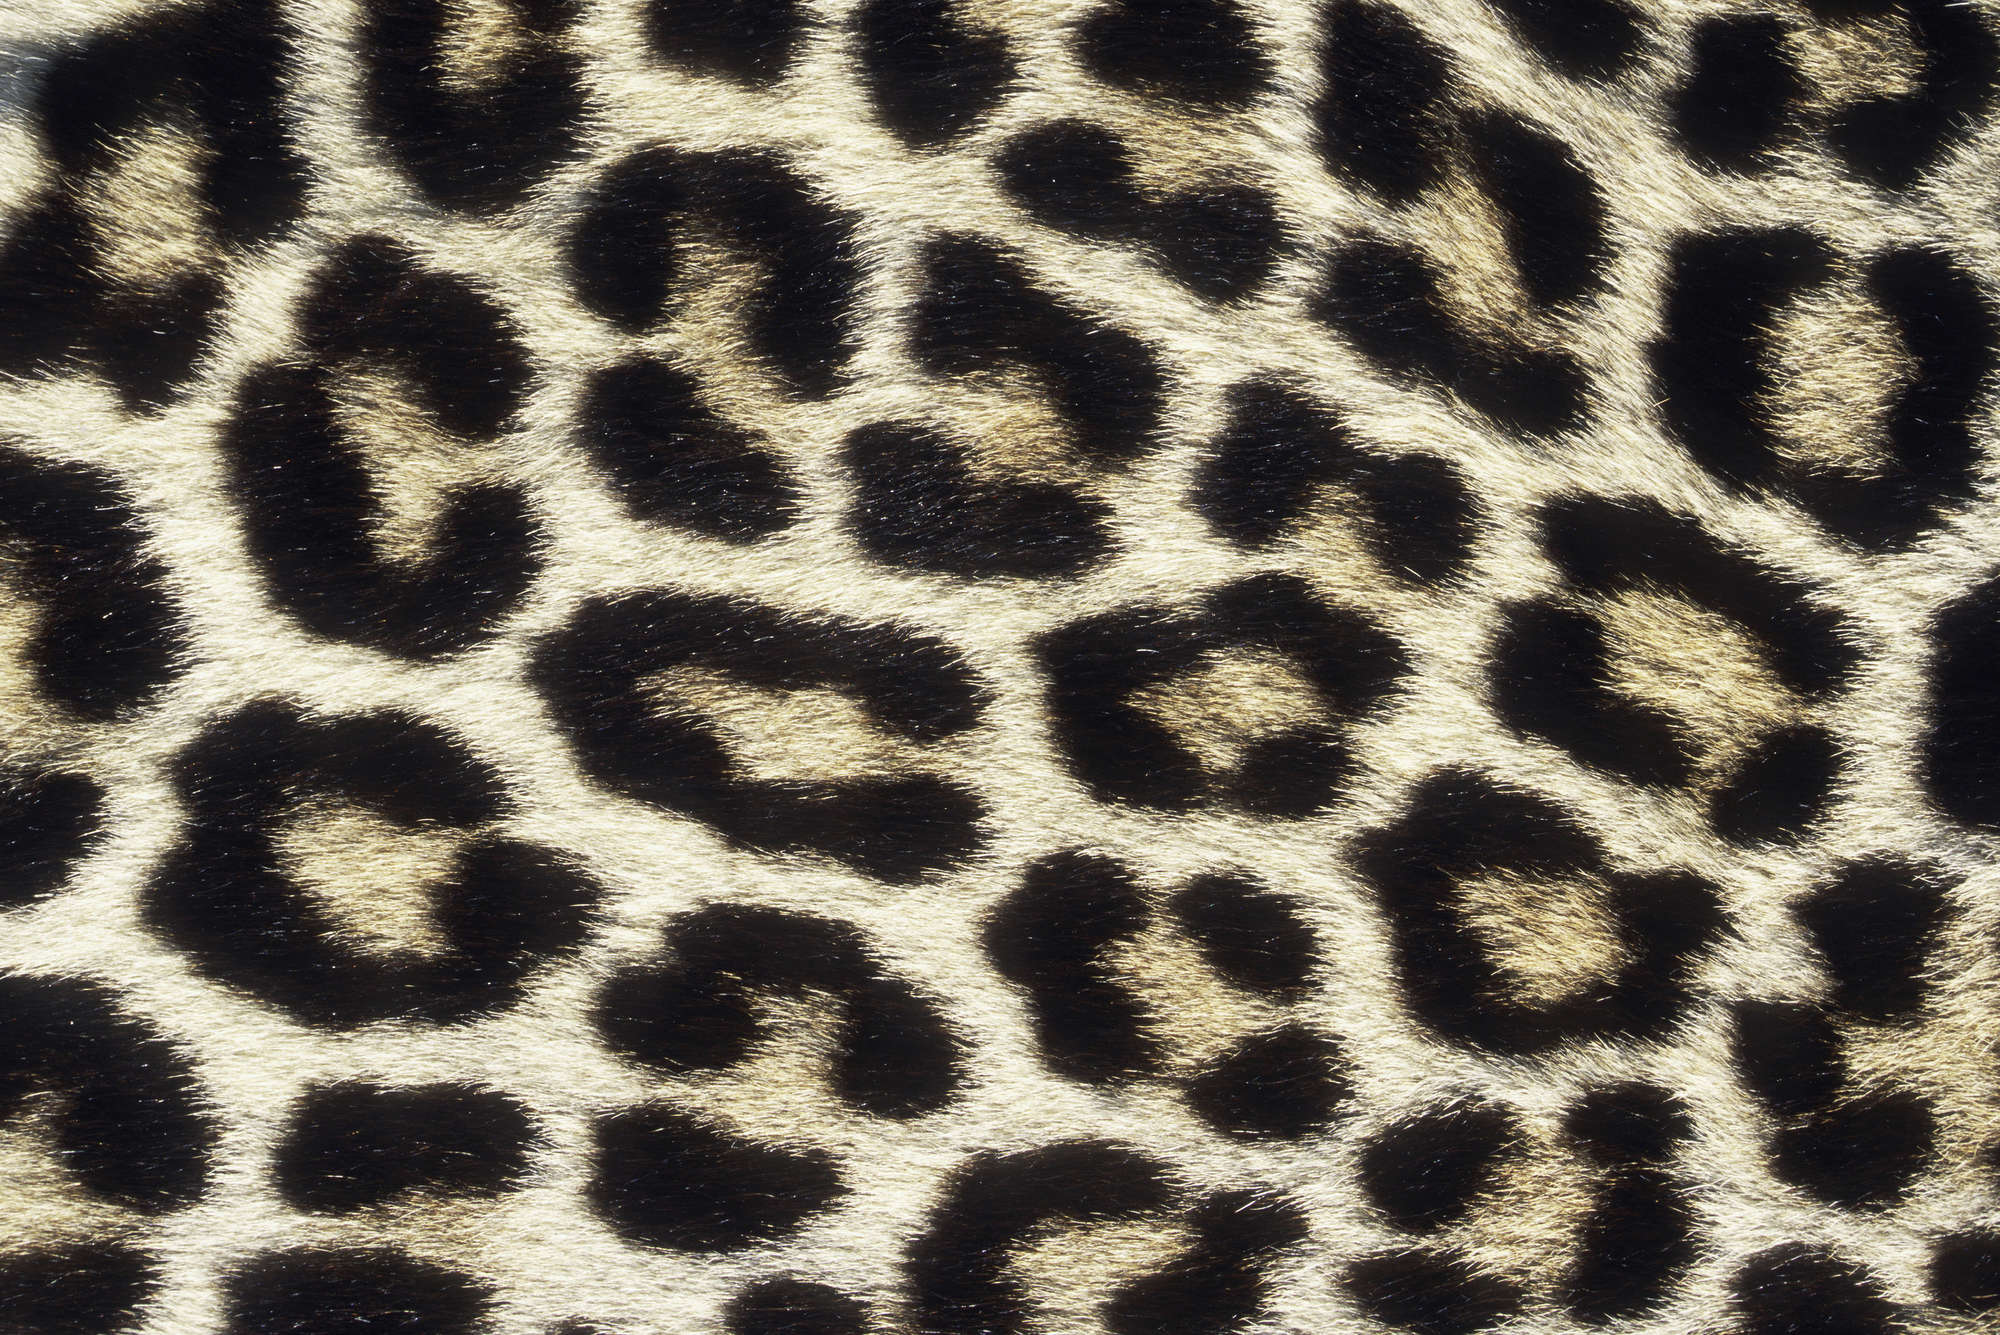             Fototapete mit Leopardenmuster – Premium Glattvlies
        